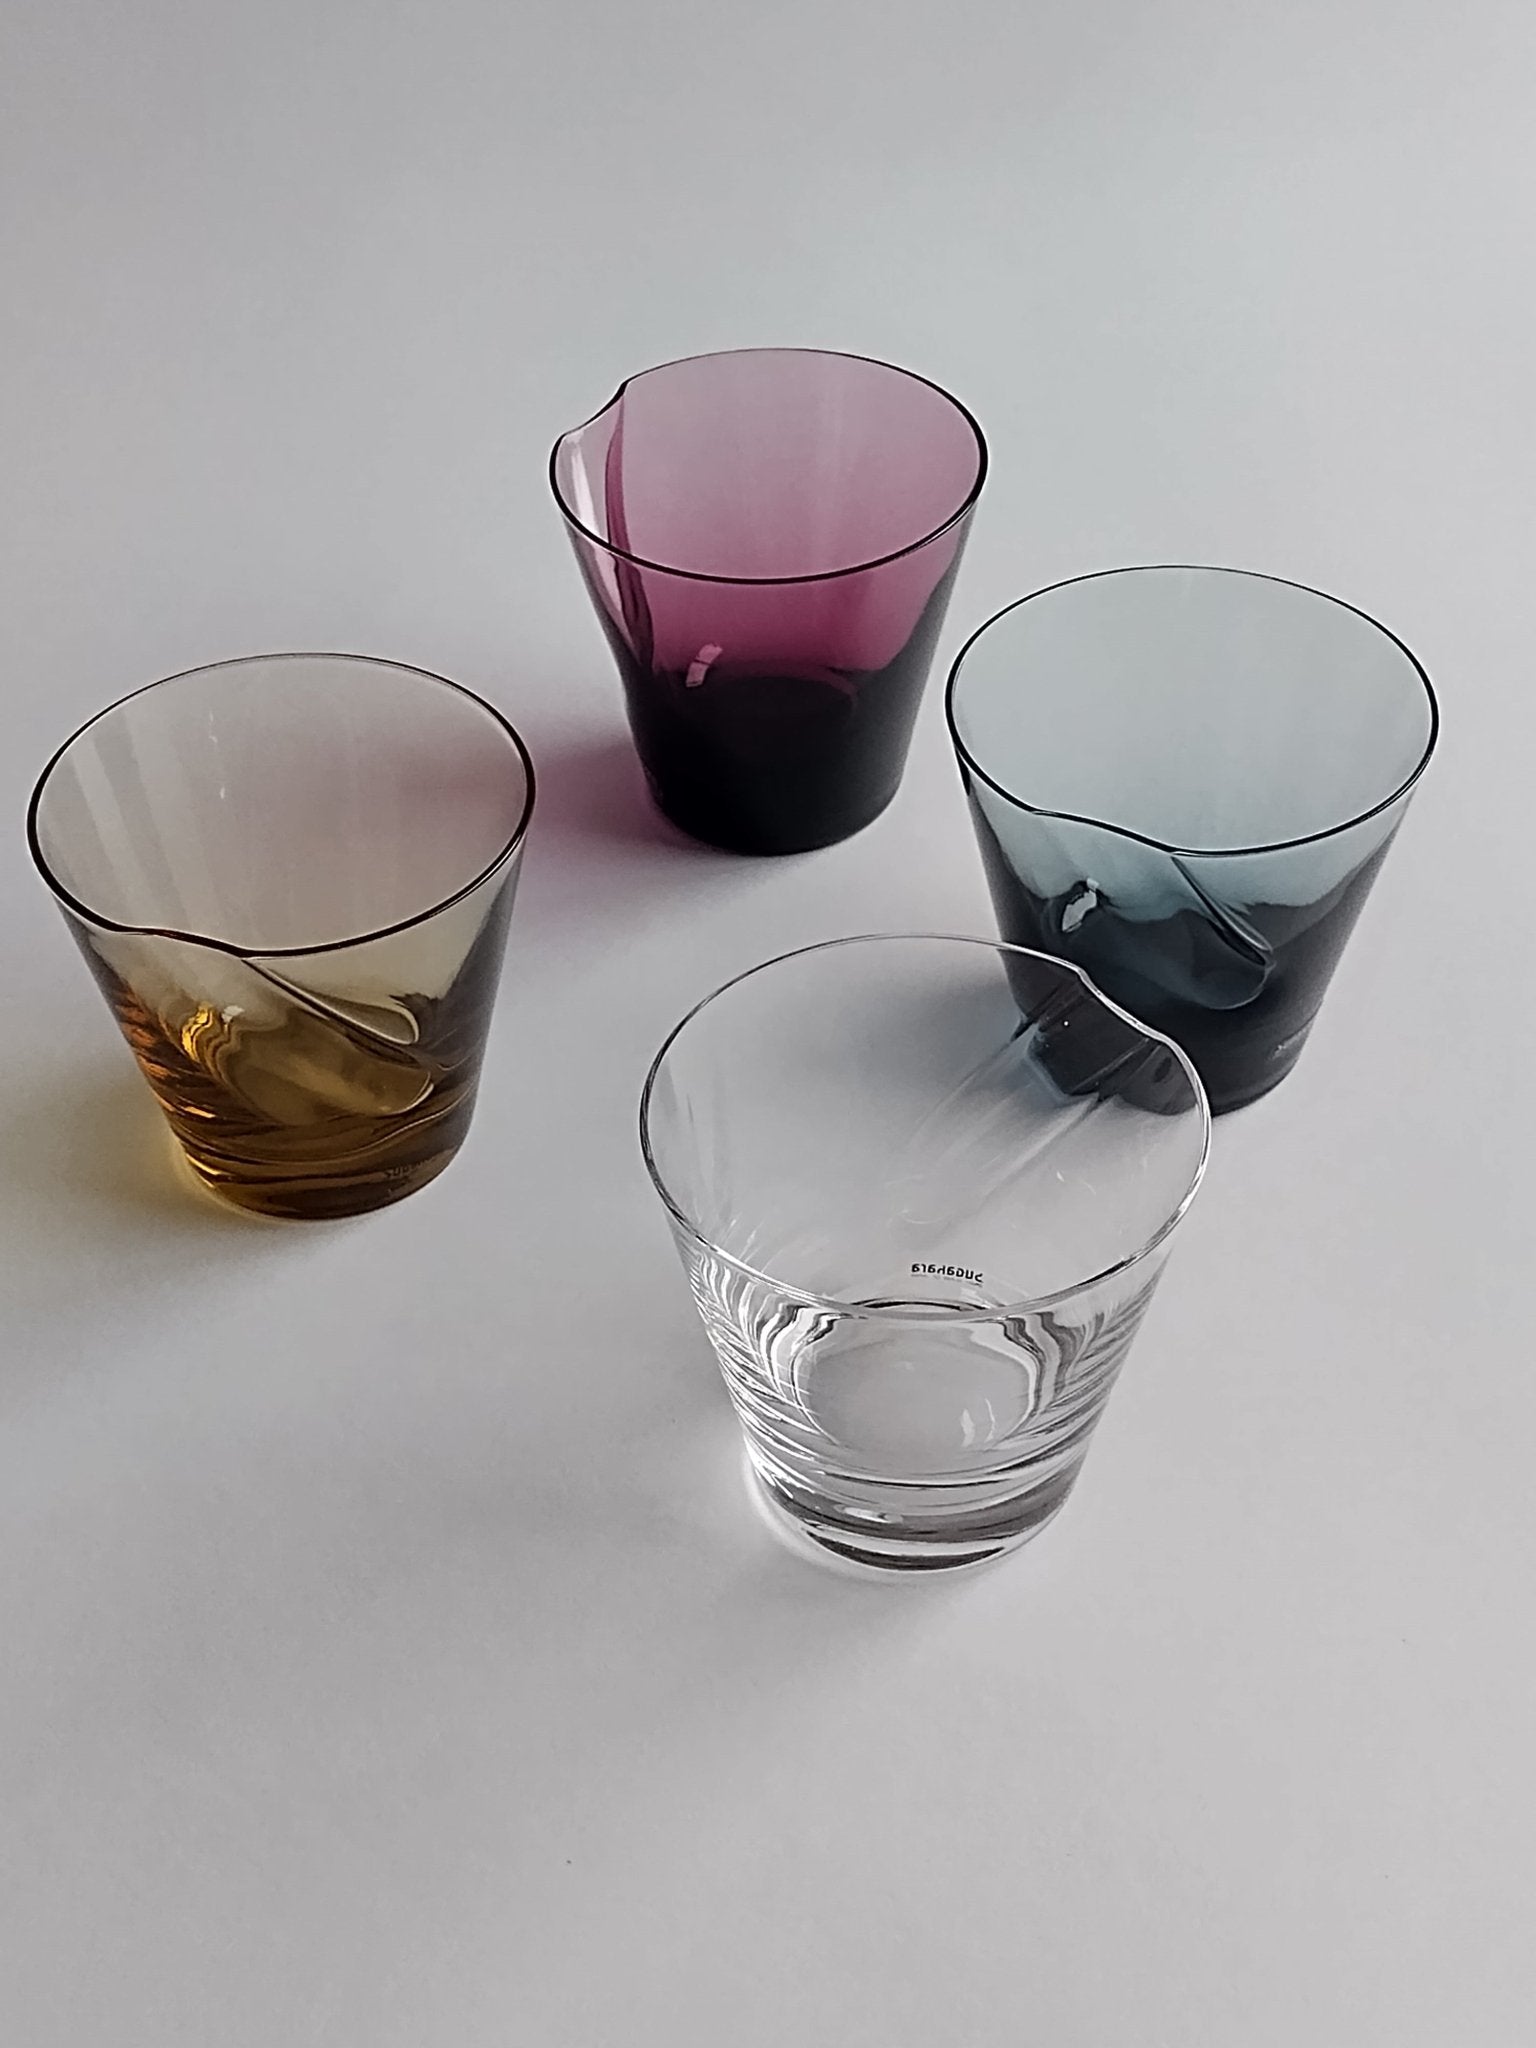 Sugahara-Peco universeel glas 250ml transparant - Schreuder-kraan.shop